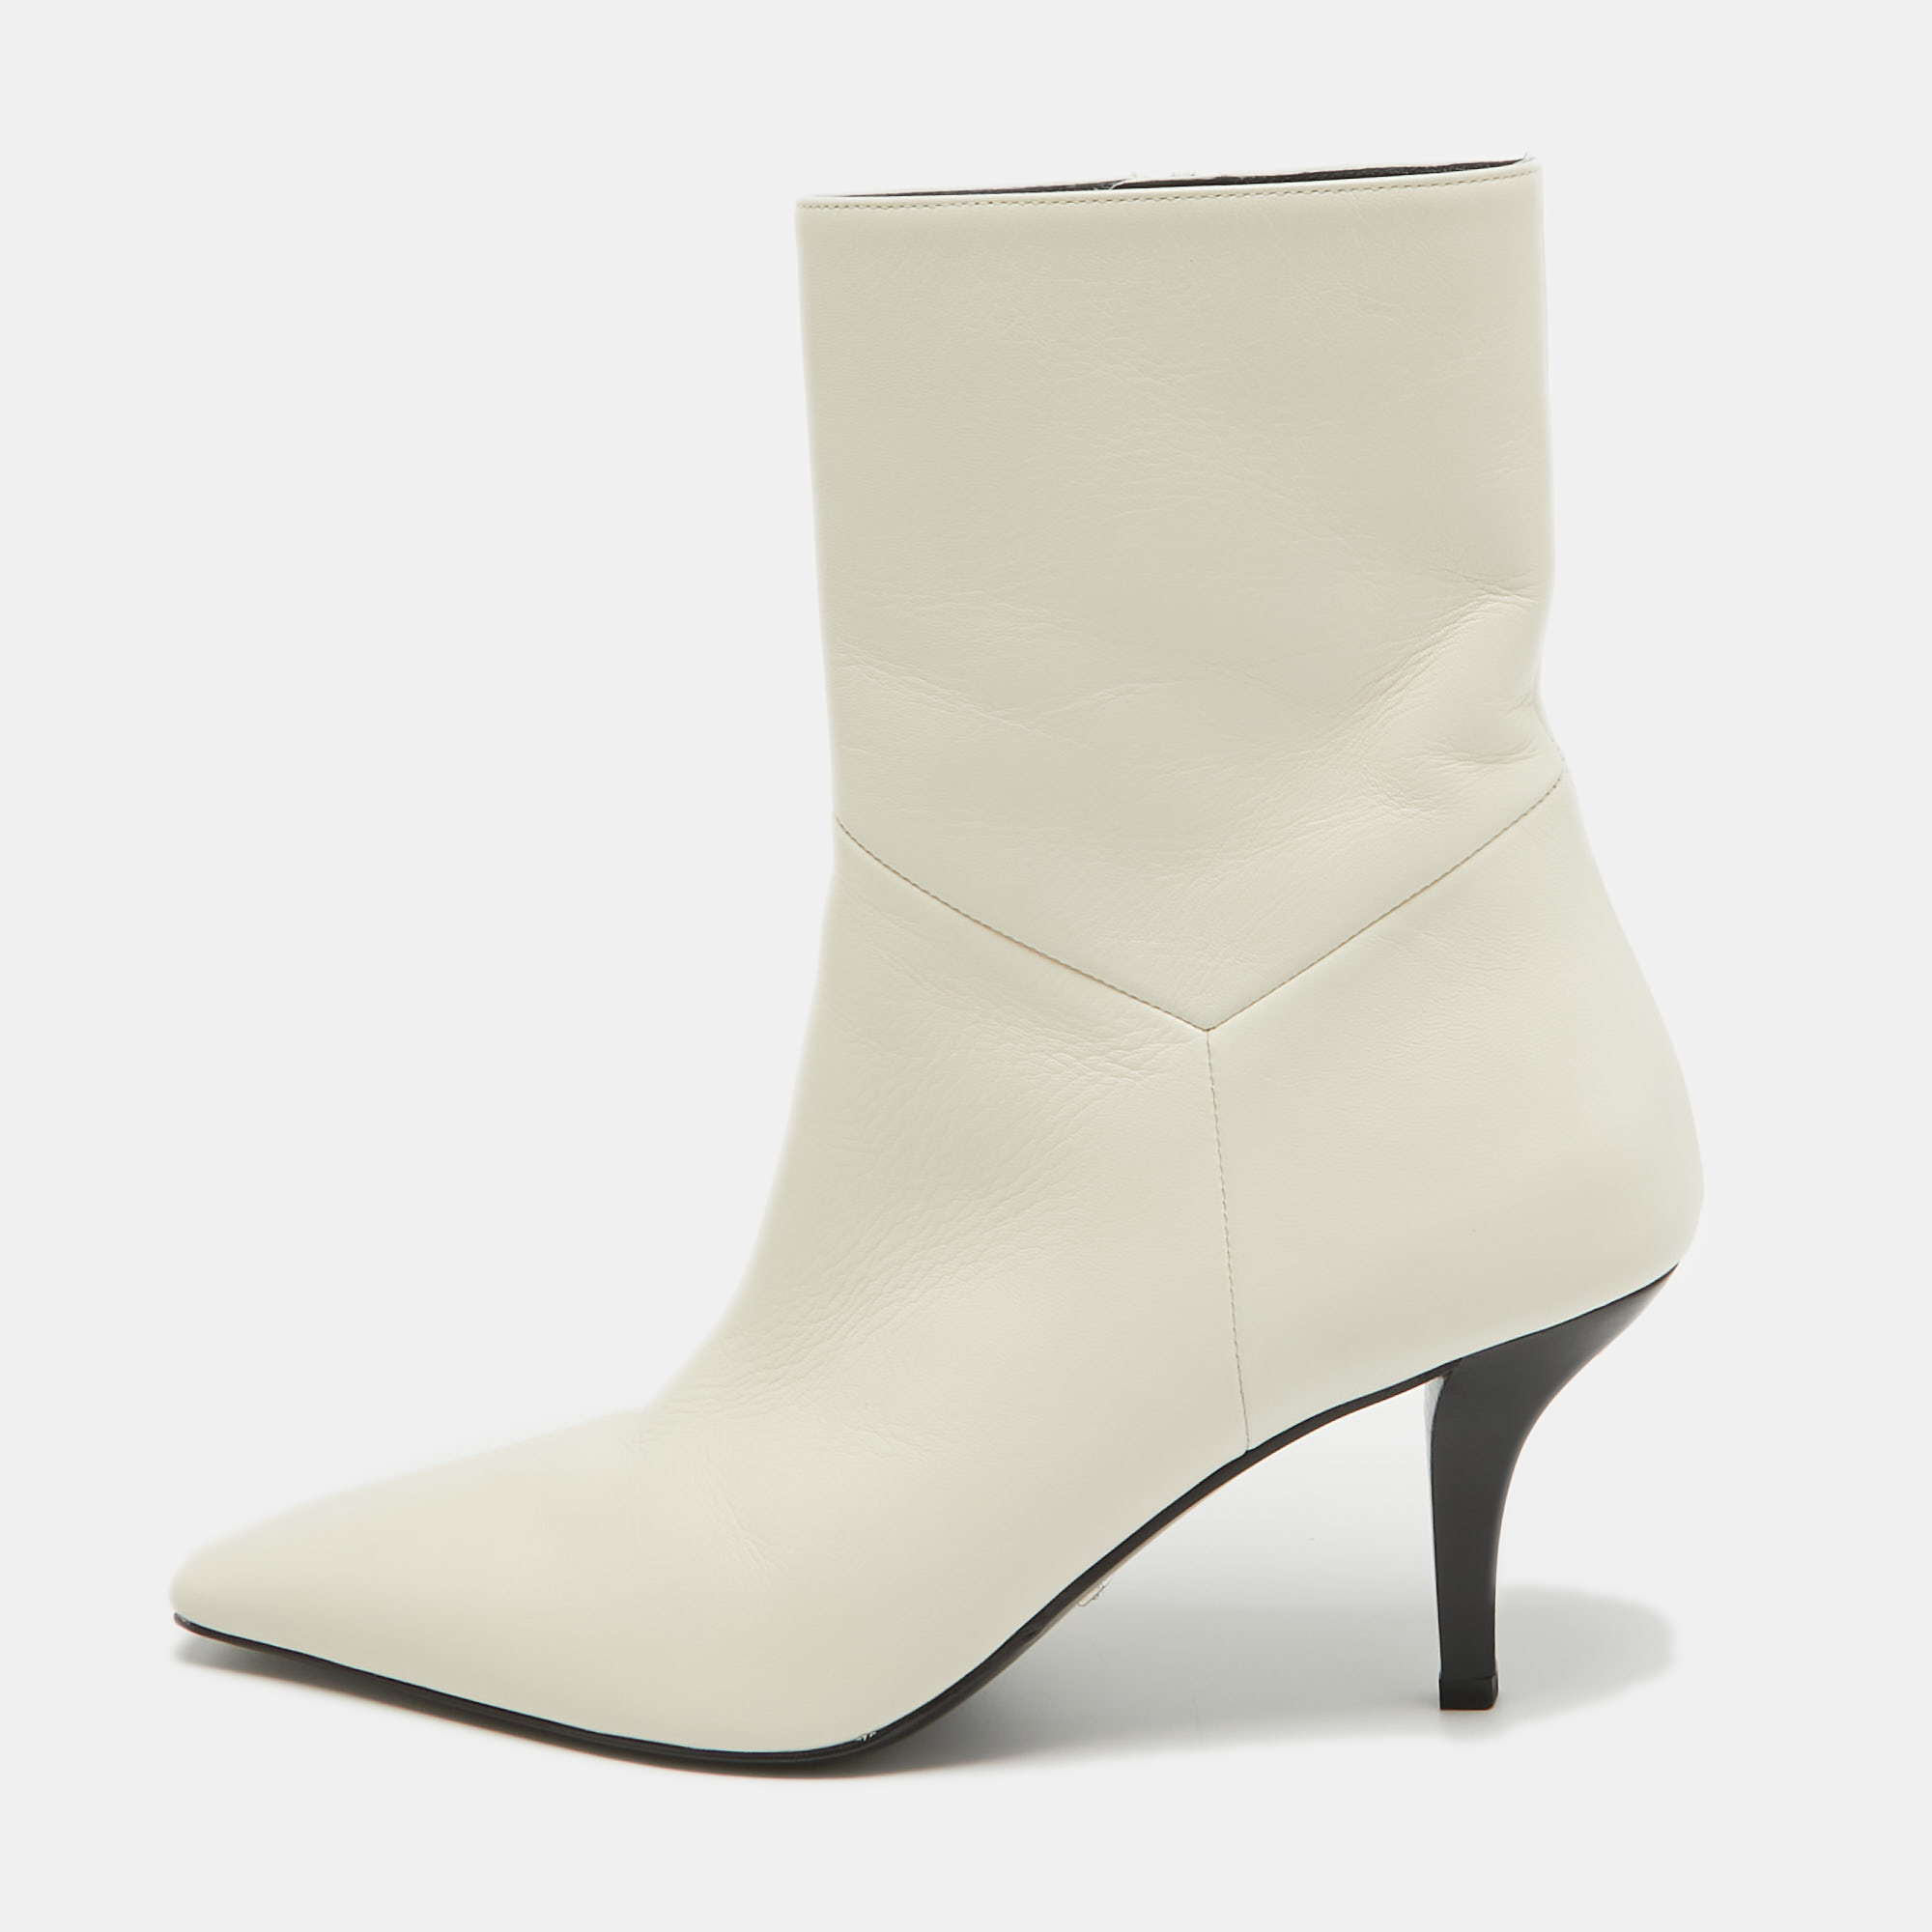 Gucci off white leather square toe mid calf boots size 39